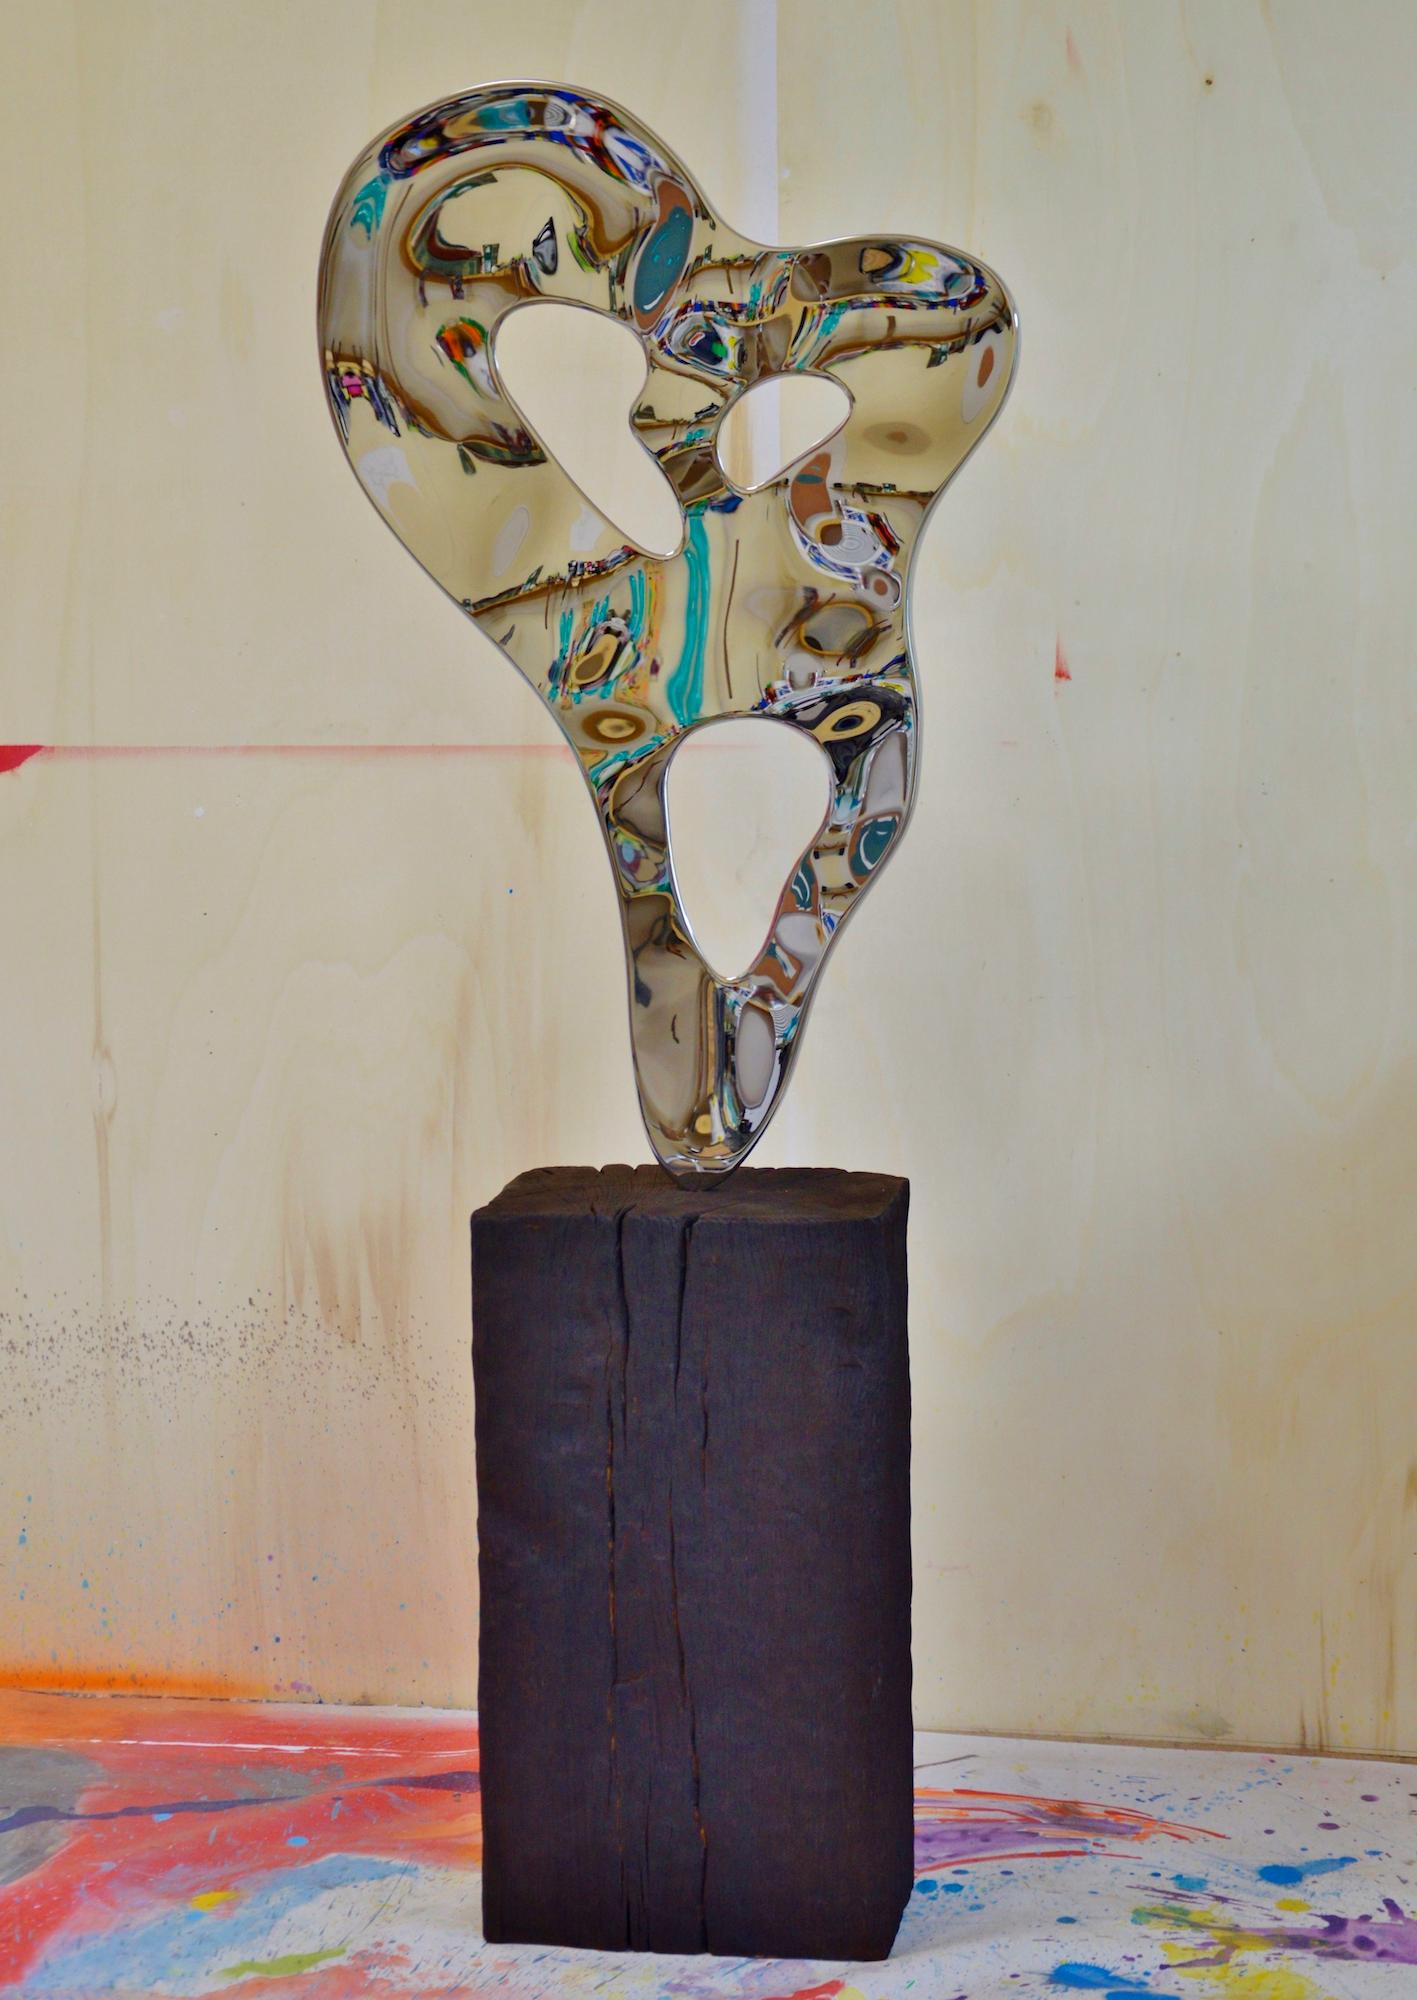 Ectoplasm II de Franck K - Sculpture en acier inoxydable, reflets, lumière, vision